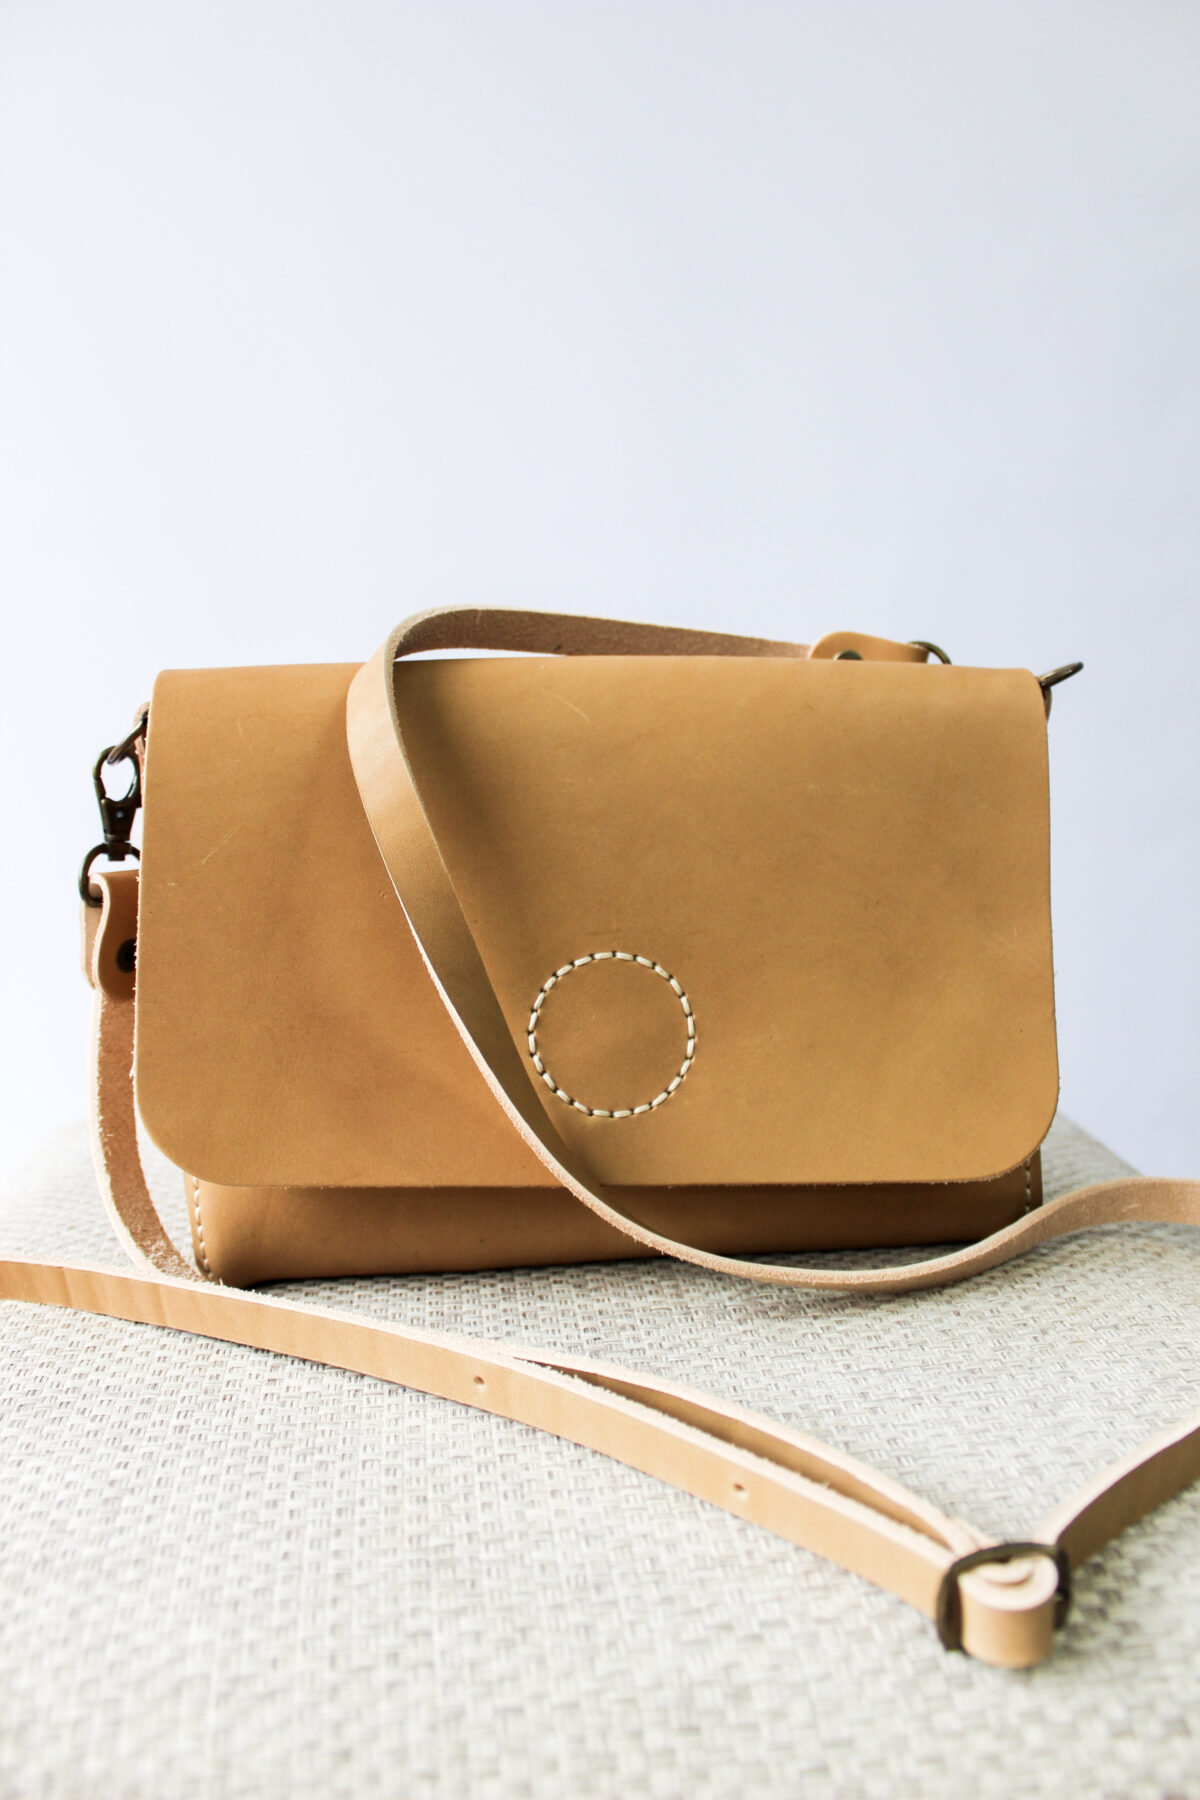 Thuli-caramel leather sling bag